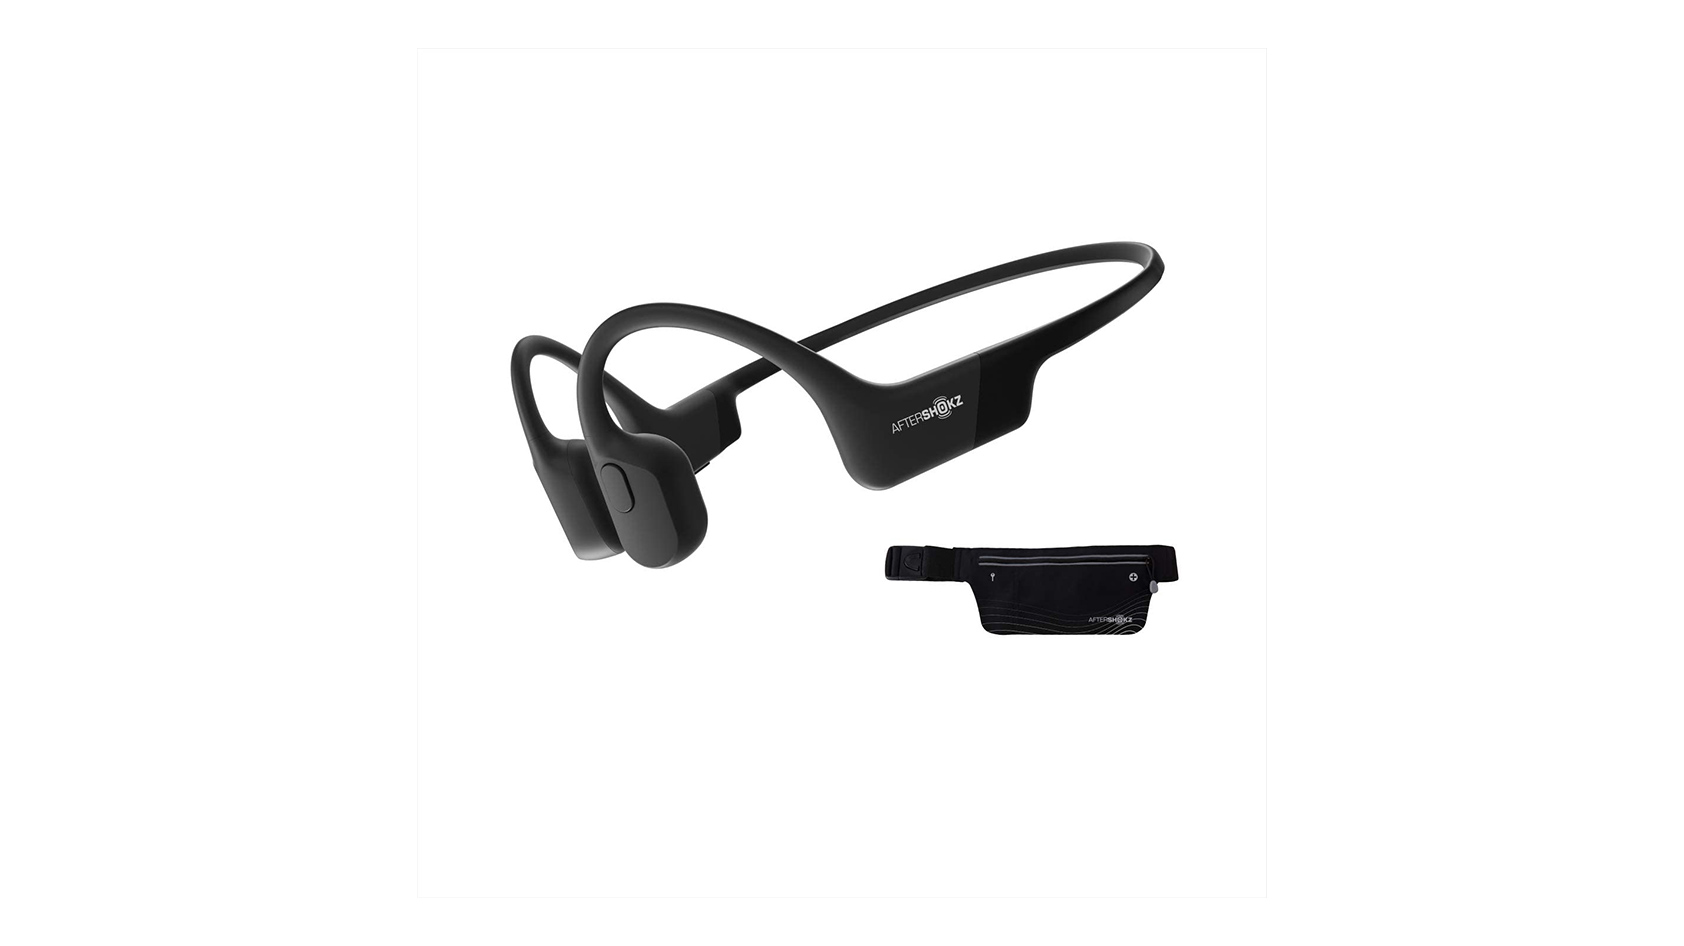 The AferShokz Aeropex bone conduction headphones in black against a white background.